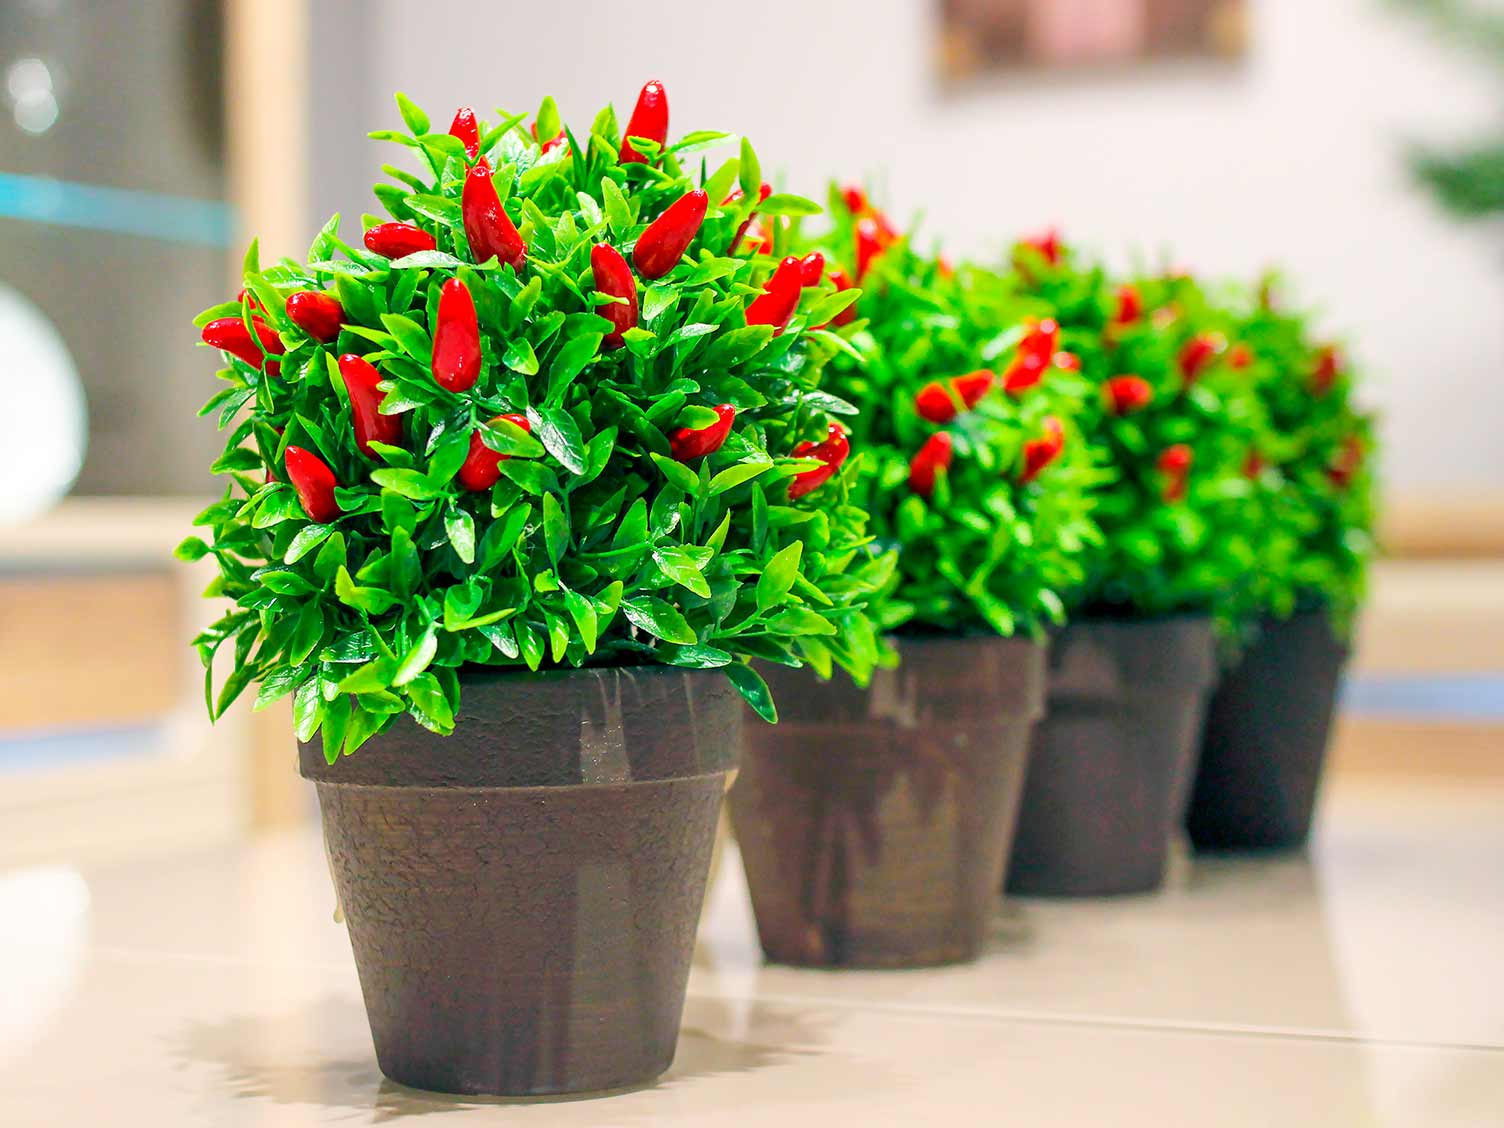 Chilli plants growing in pots indoors